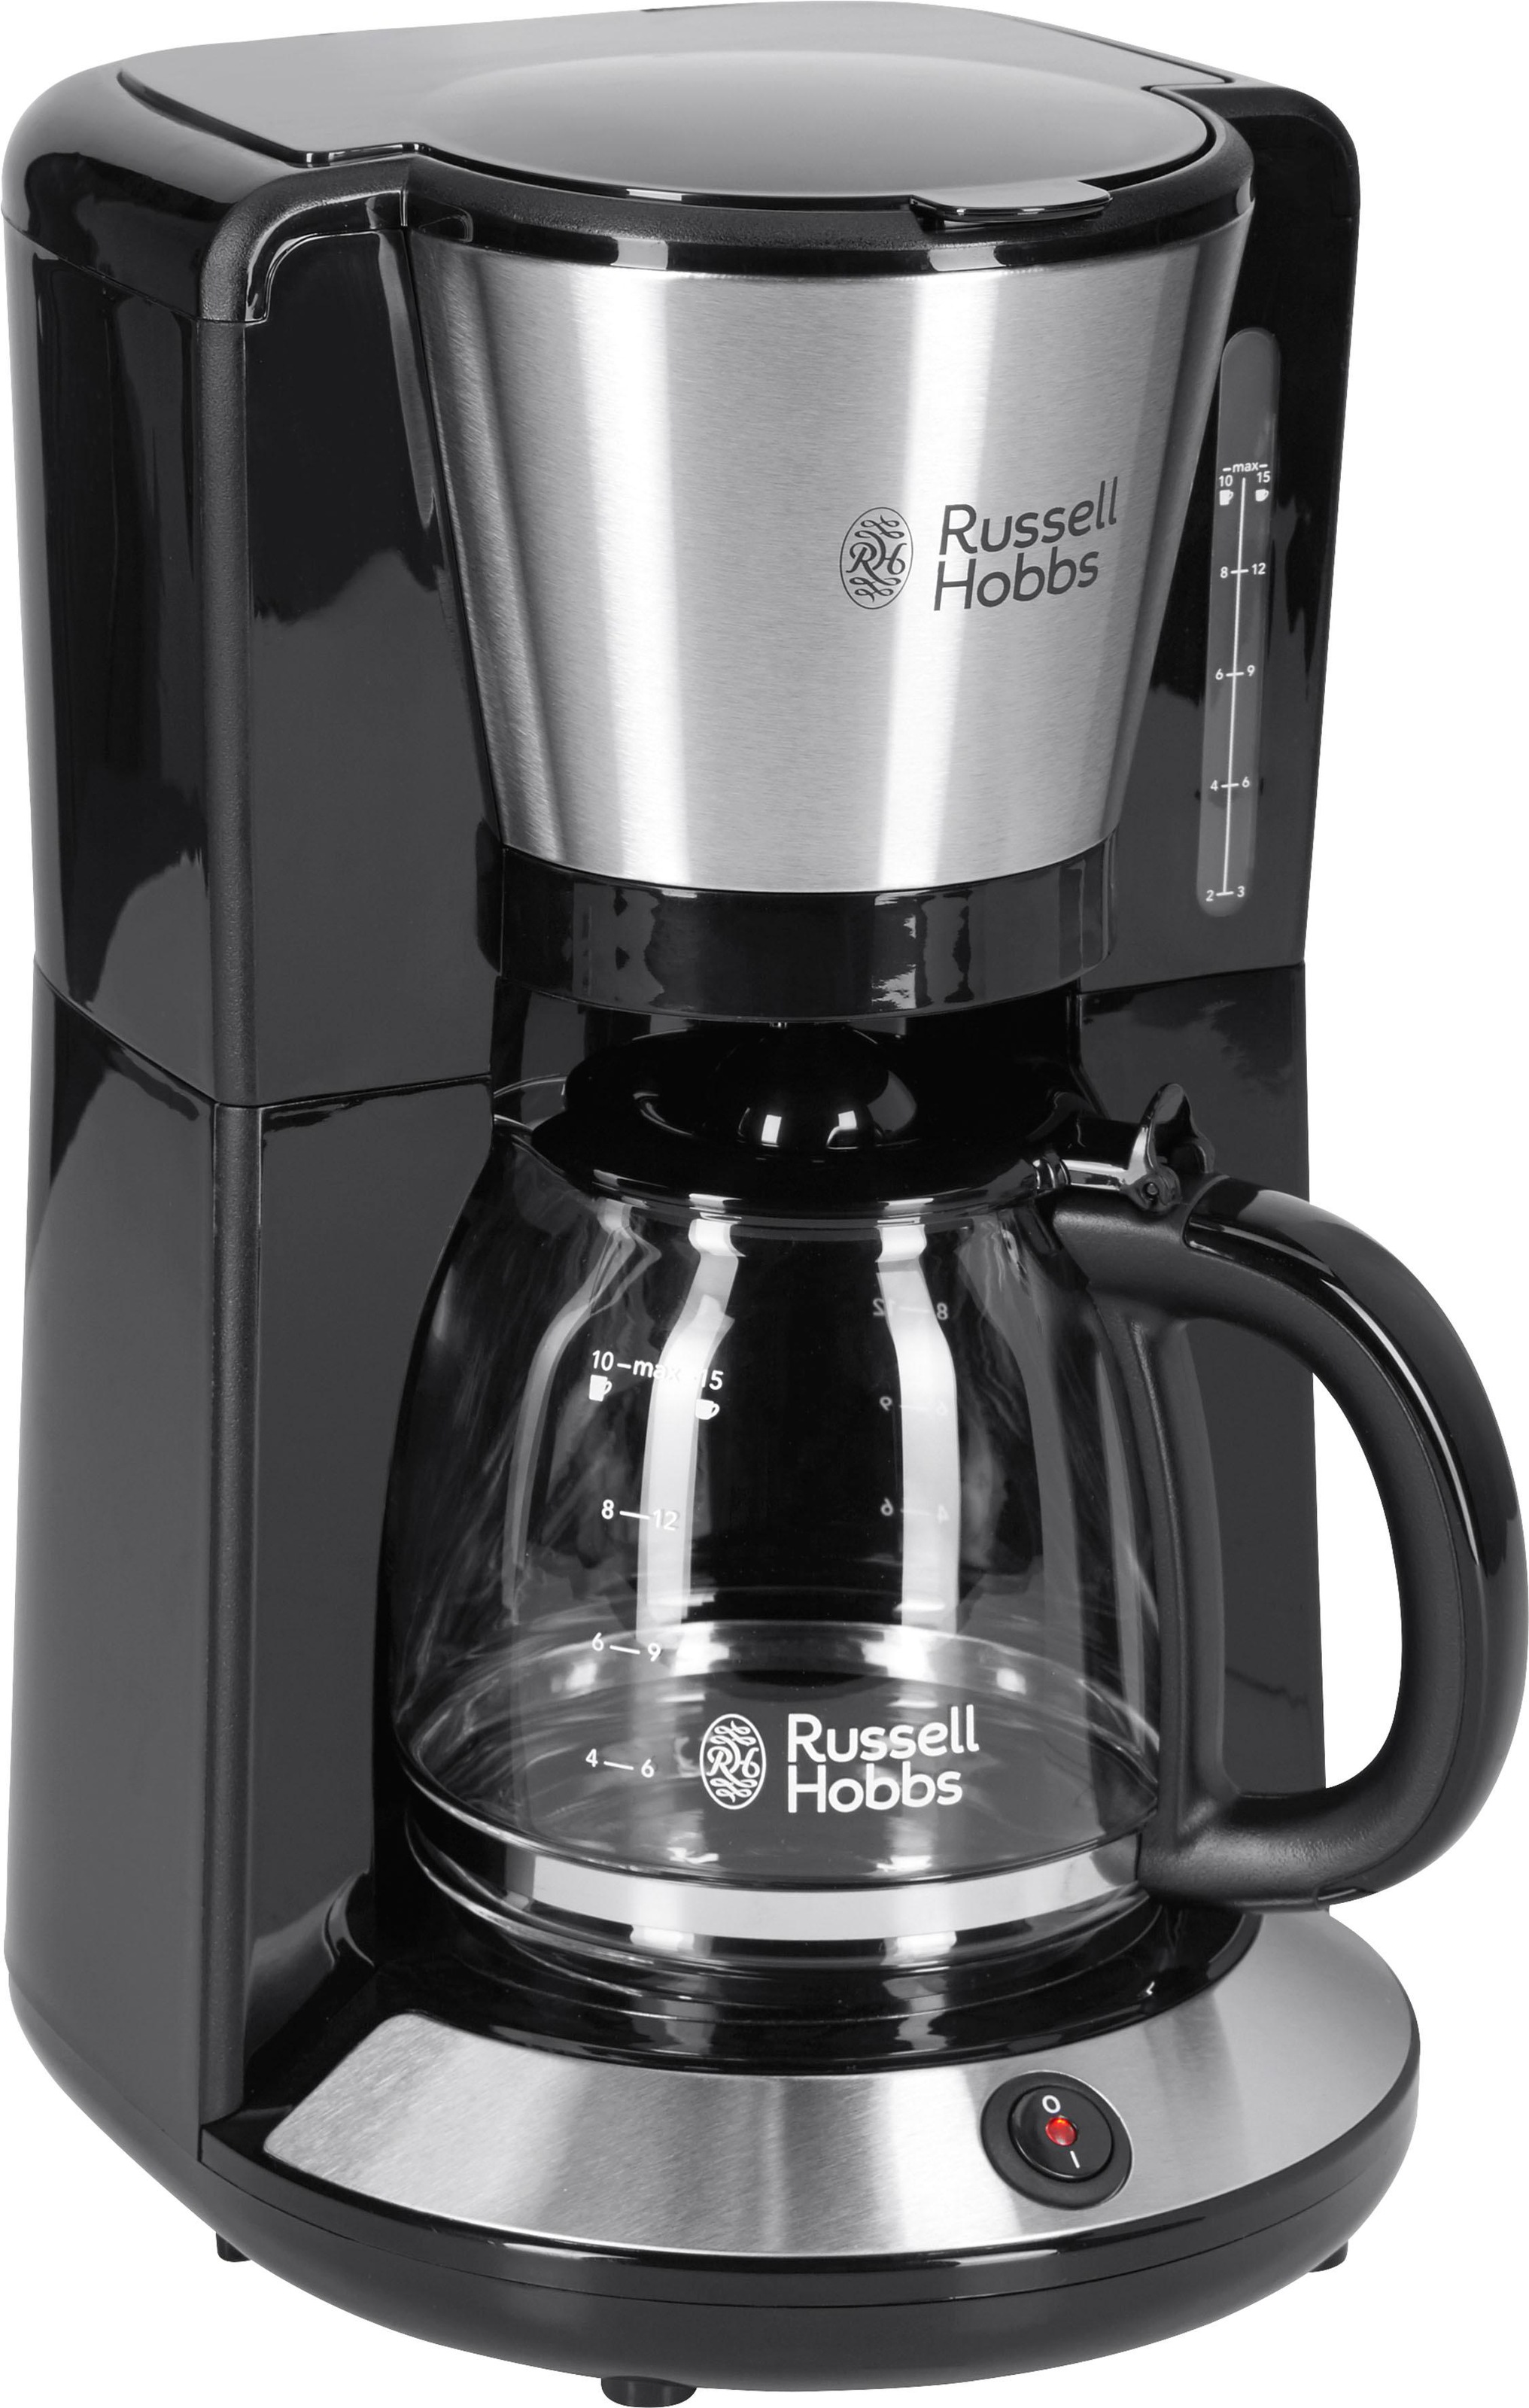 RUSSELL HOBBS Filterkaffeemaschine "Adventure 24010-56", 1,25 l Kaffeekanne, Papierfilter, 1x4, mit Glaskanne, 1100 Watt